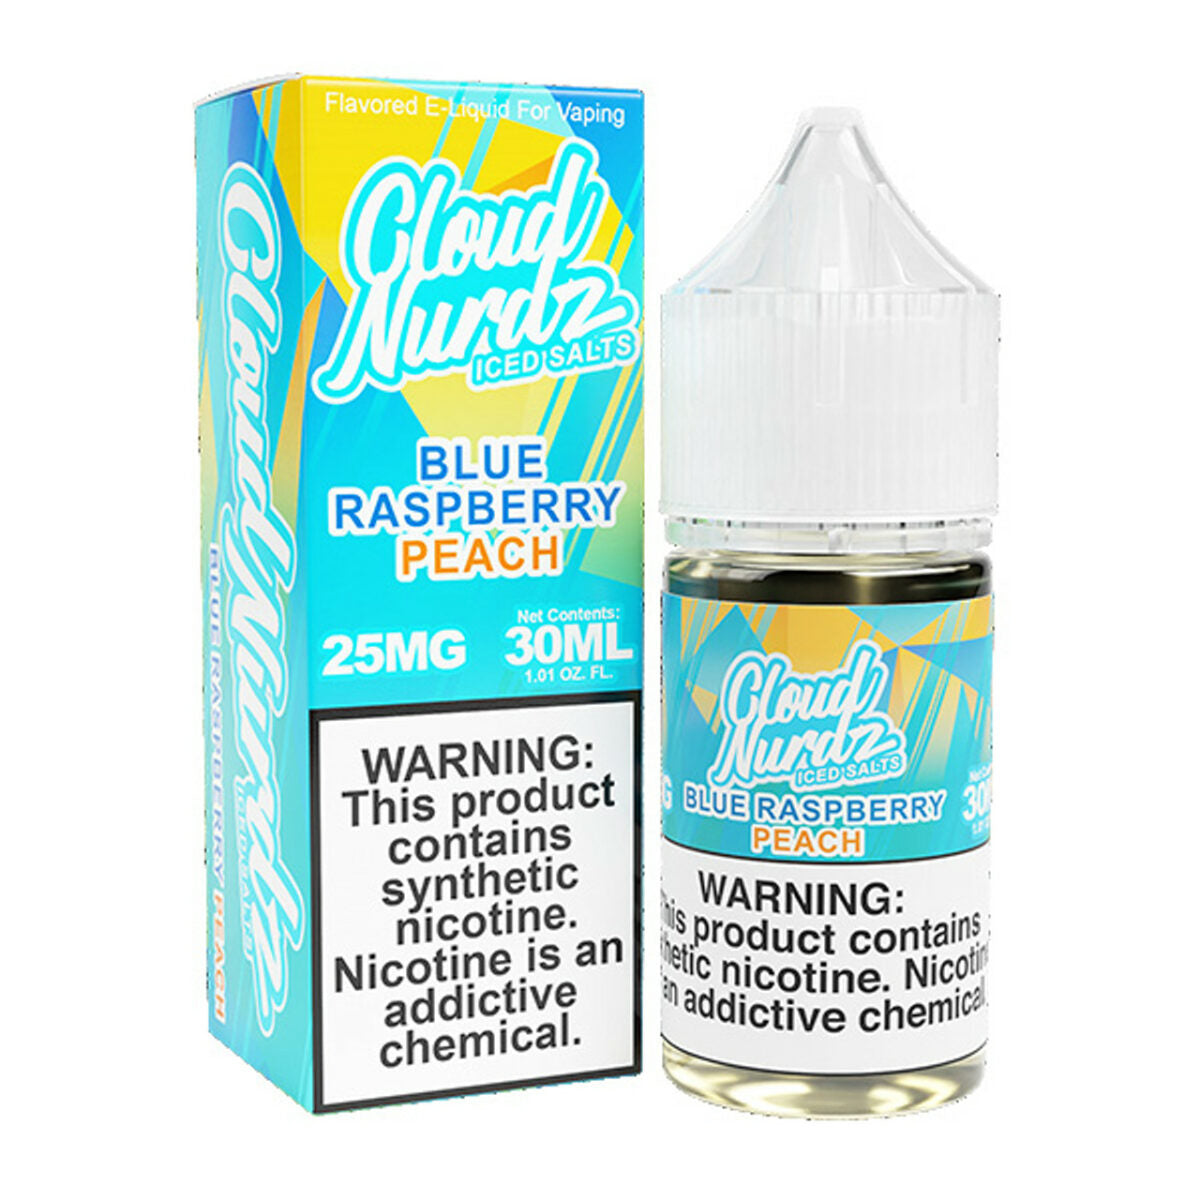 Iced Peach Blue Raz by Cloud Nurdz Salts Series 30mL with Packaging